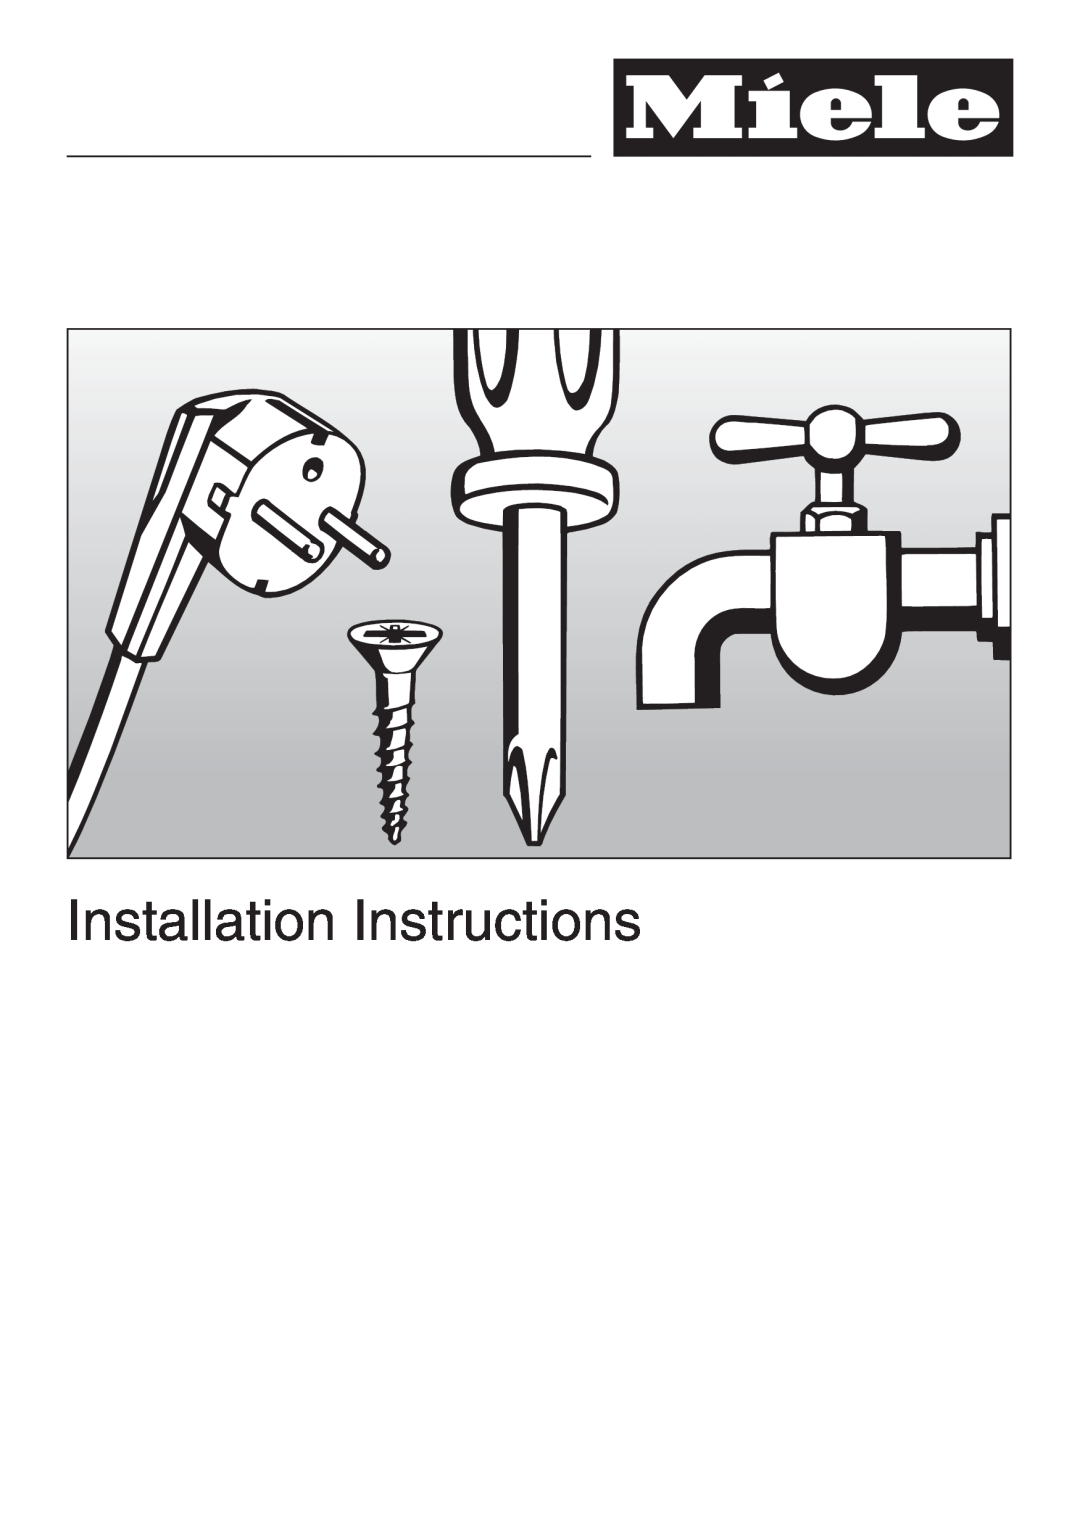 Miele M8260-1 installation instructions Installation Instructions 